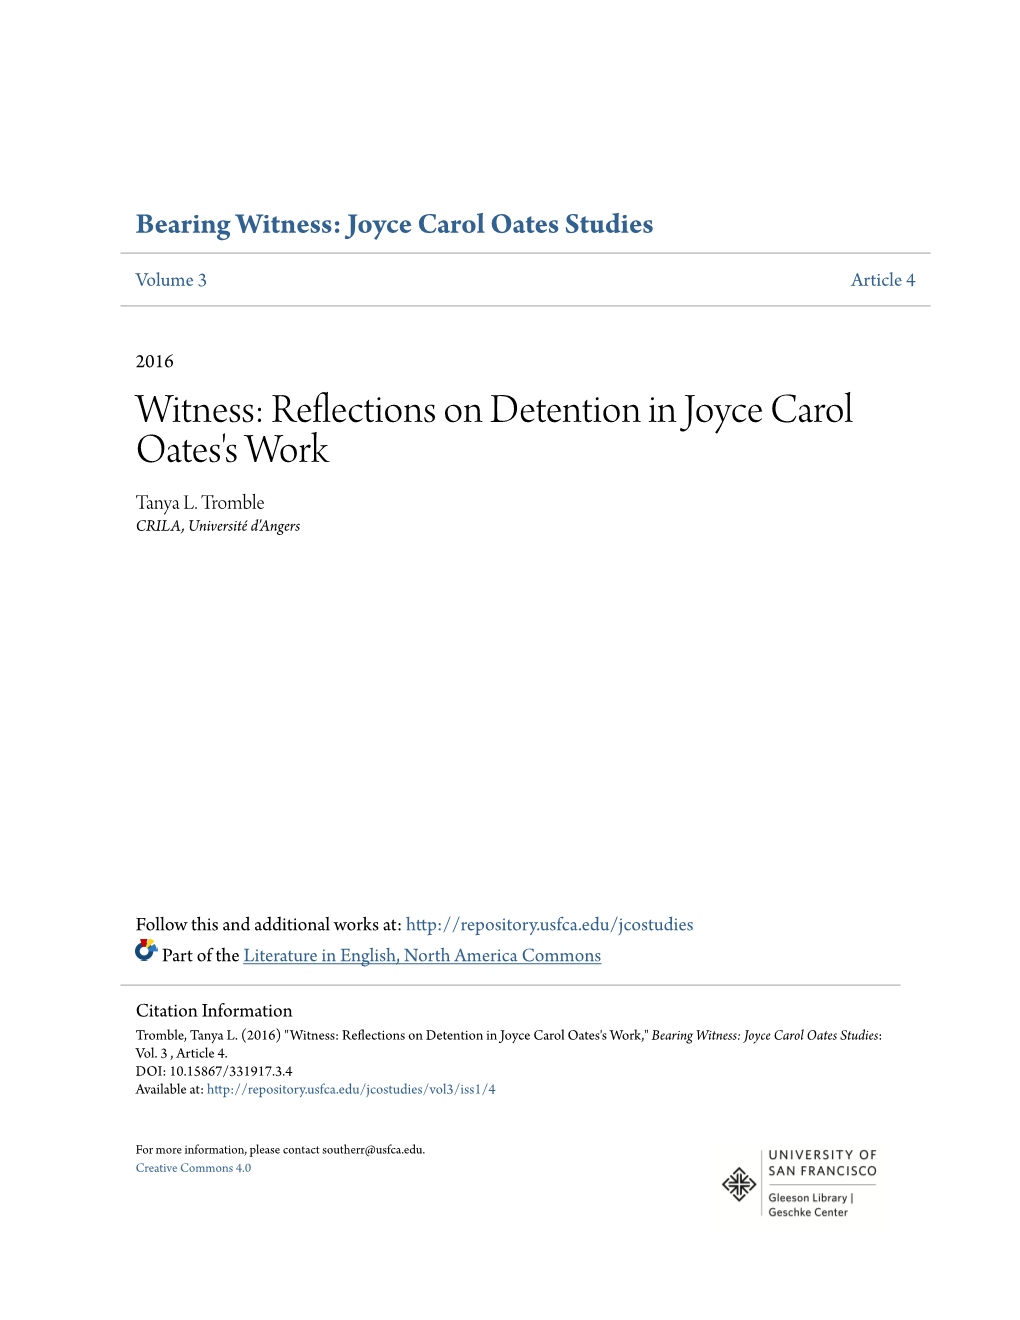 Witness: Reflections on Detention in Joyce Carol Oates's Work Tanya L